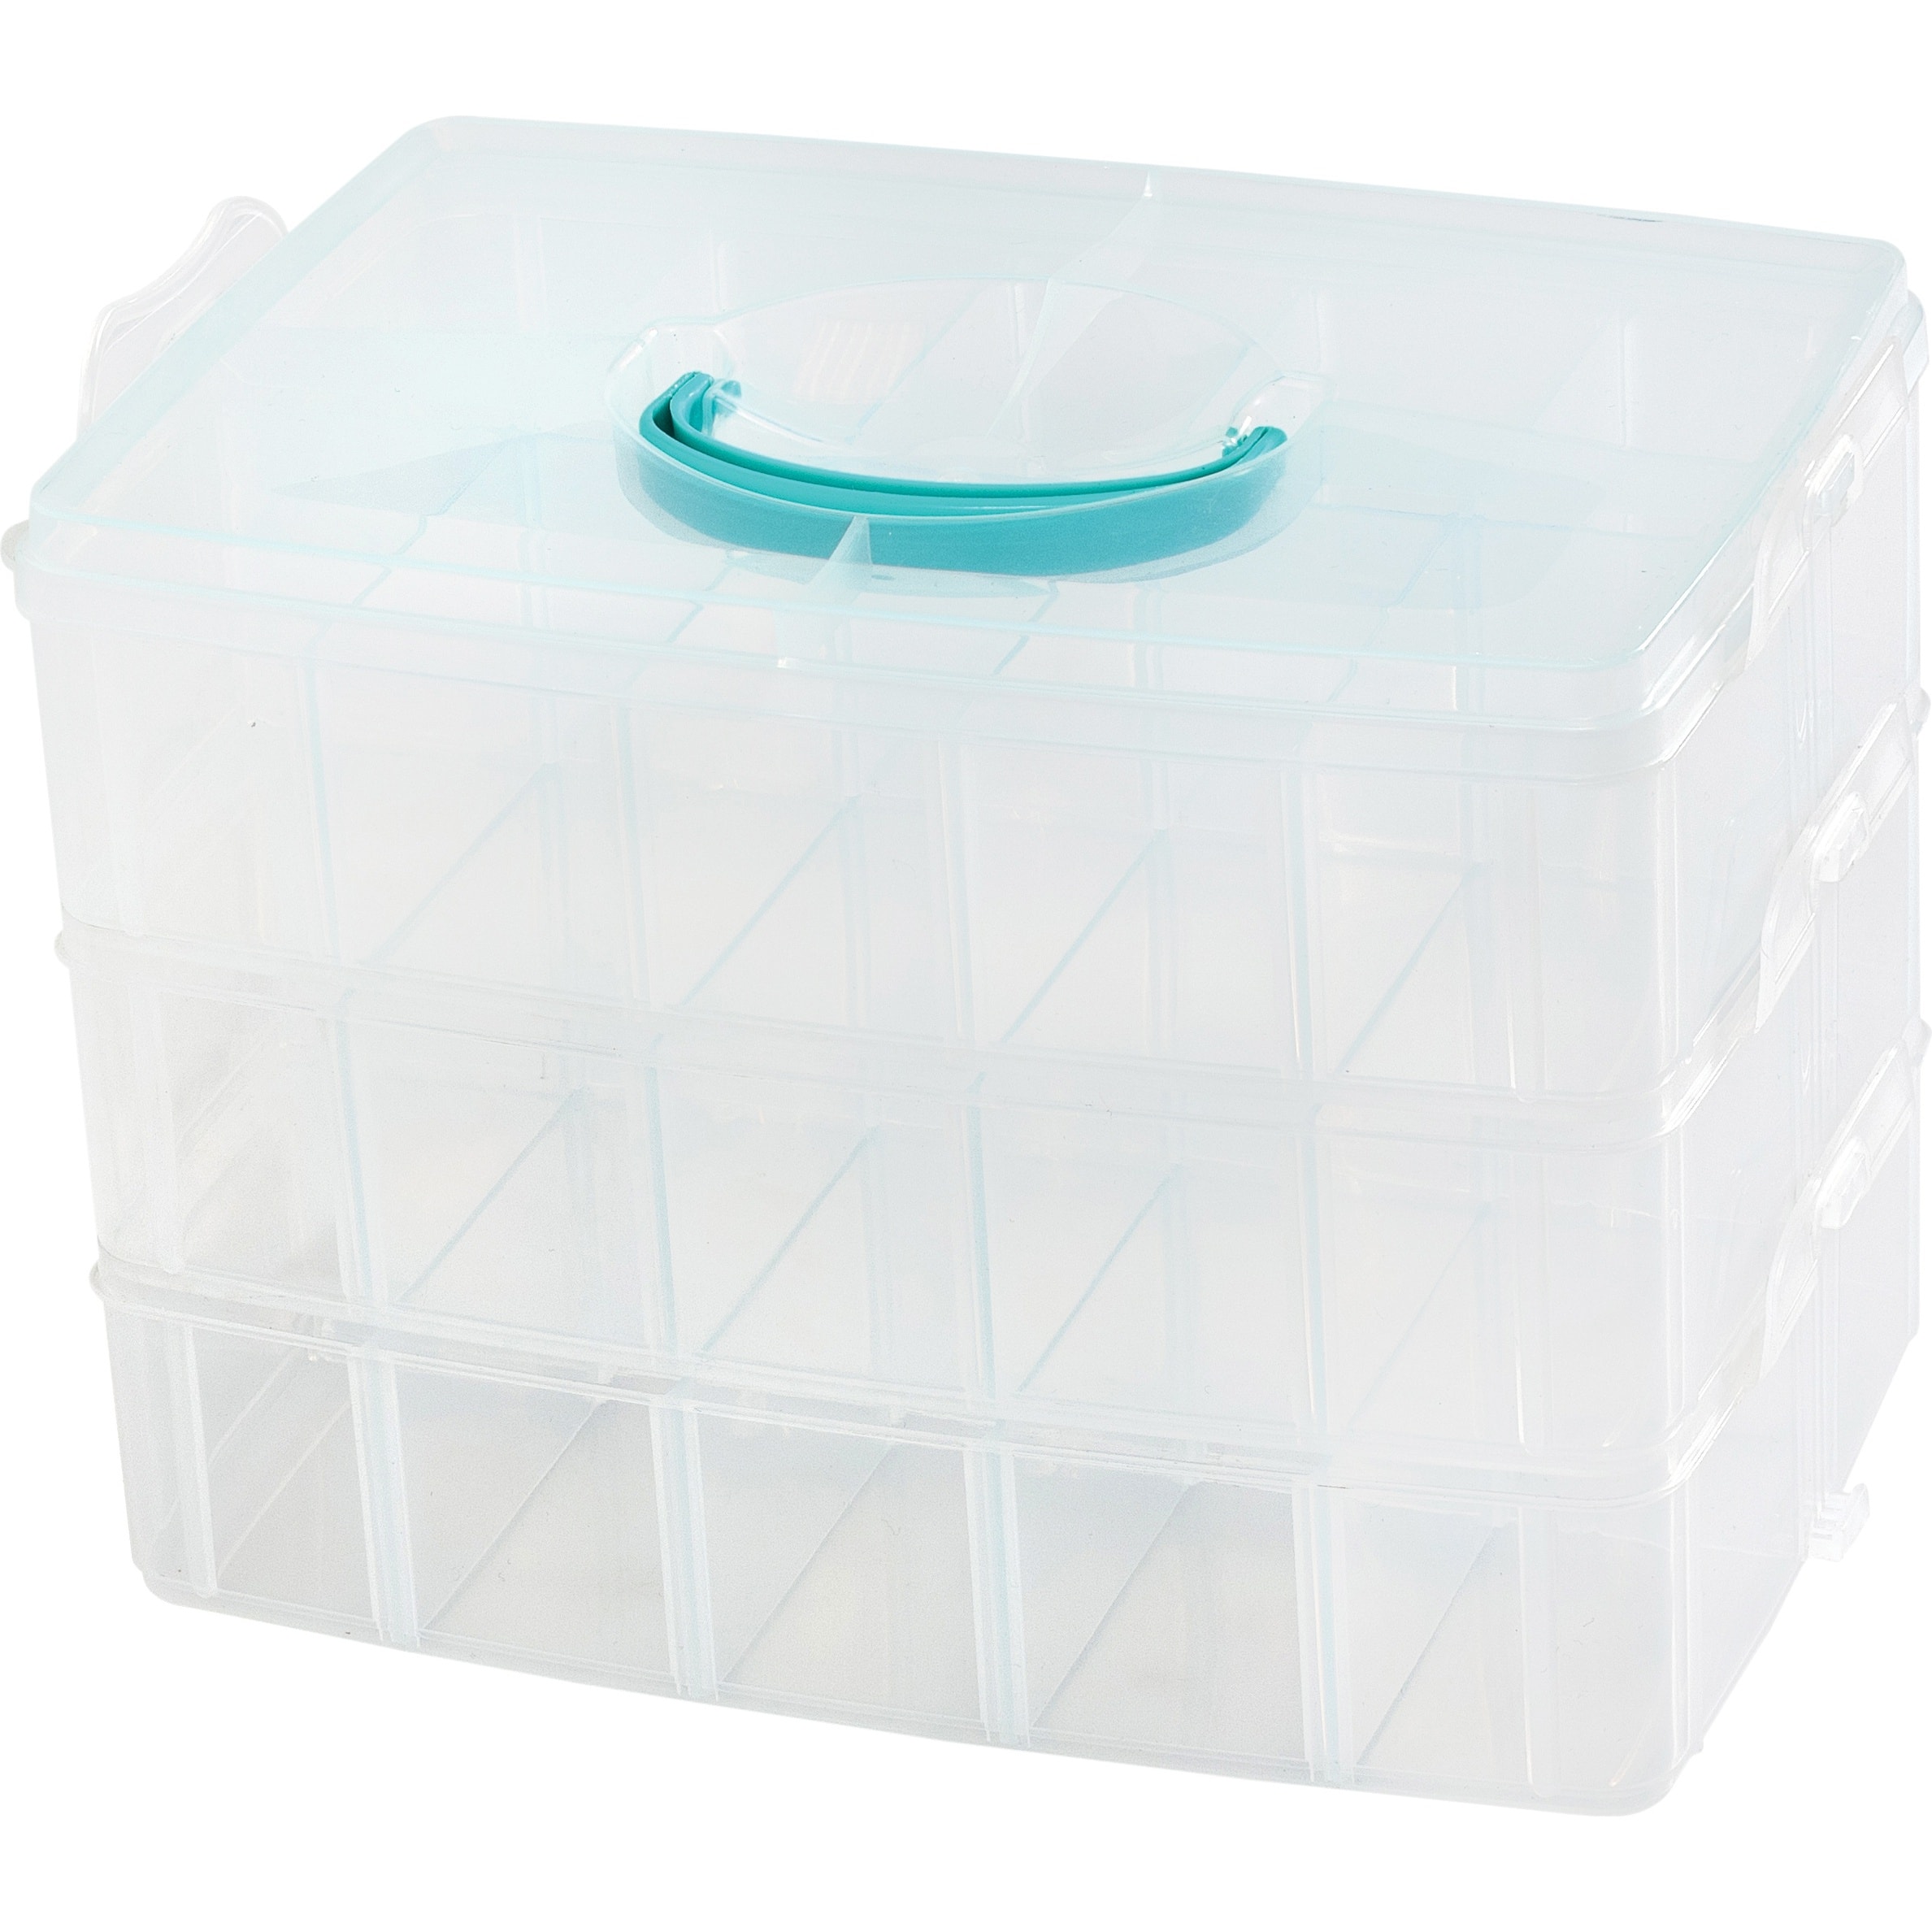 3 Tier Plastic Craft Storage Organizer Box Case with Adjustable Compartments 